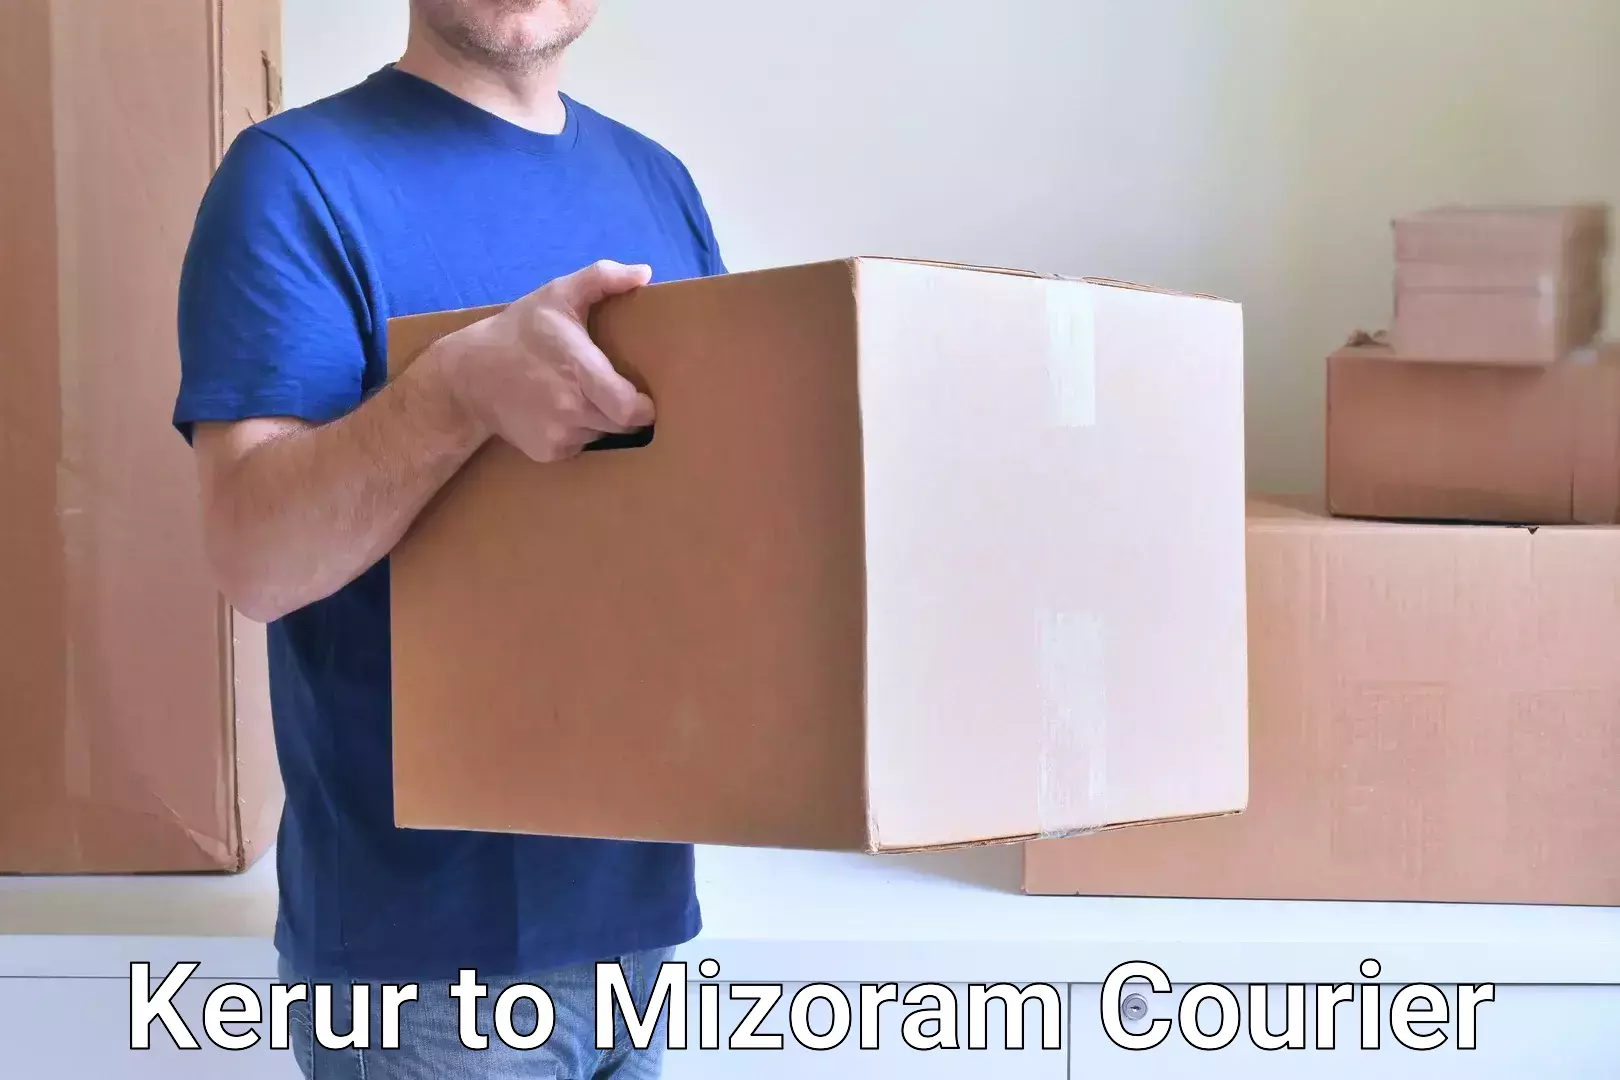 Package tracking in Kerur to Mizoram